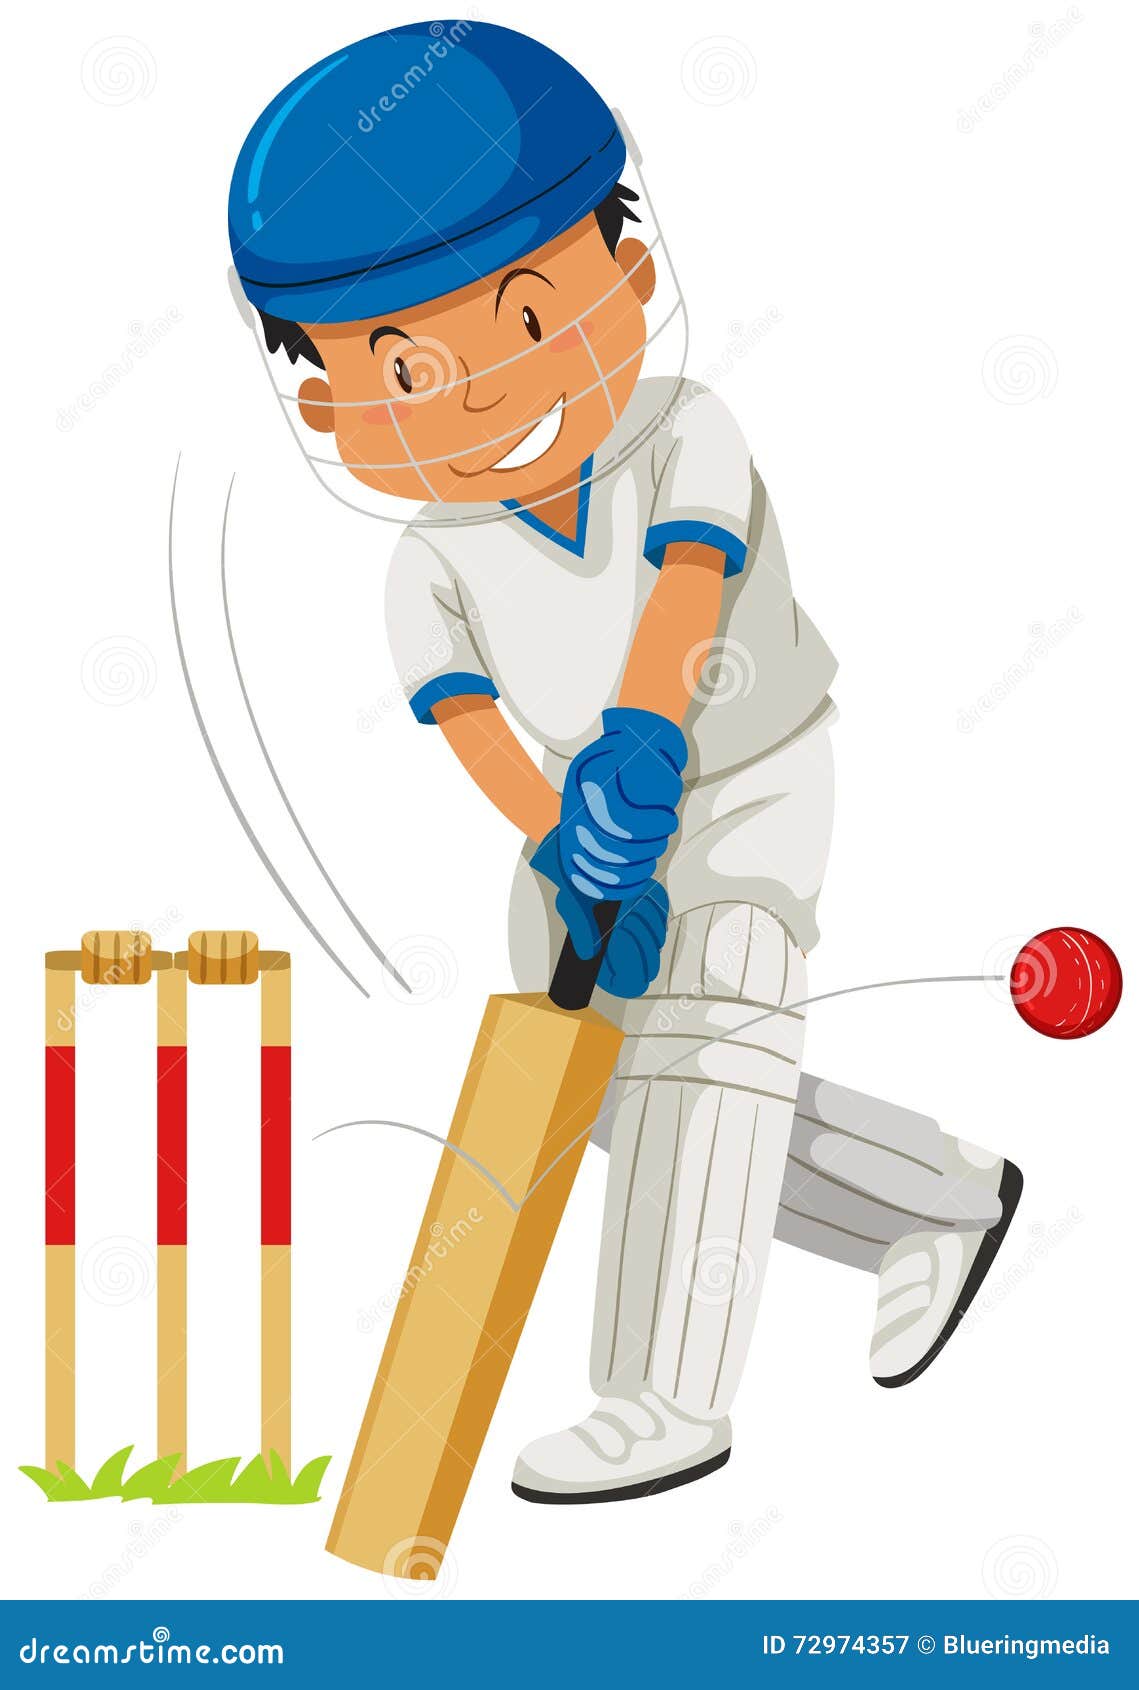 Cricket Player Hitting Ball with Bat Stock Vector - Illustration of  hitting, sport: 72974357